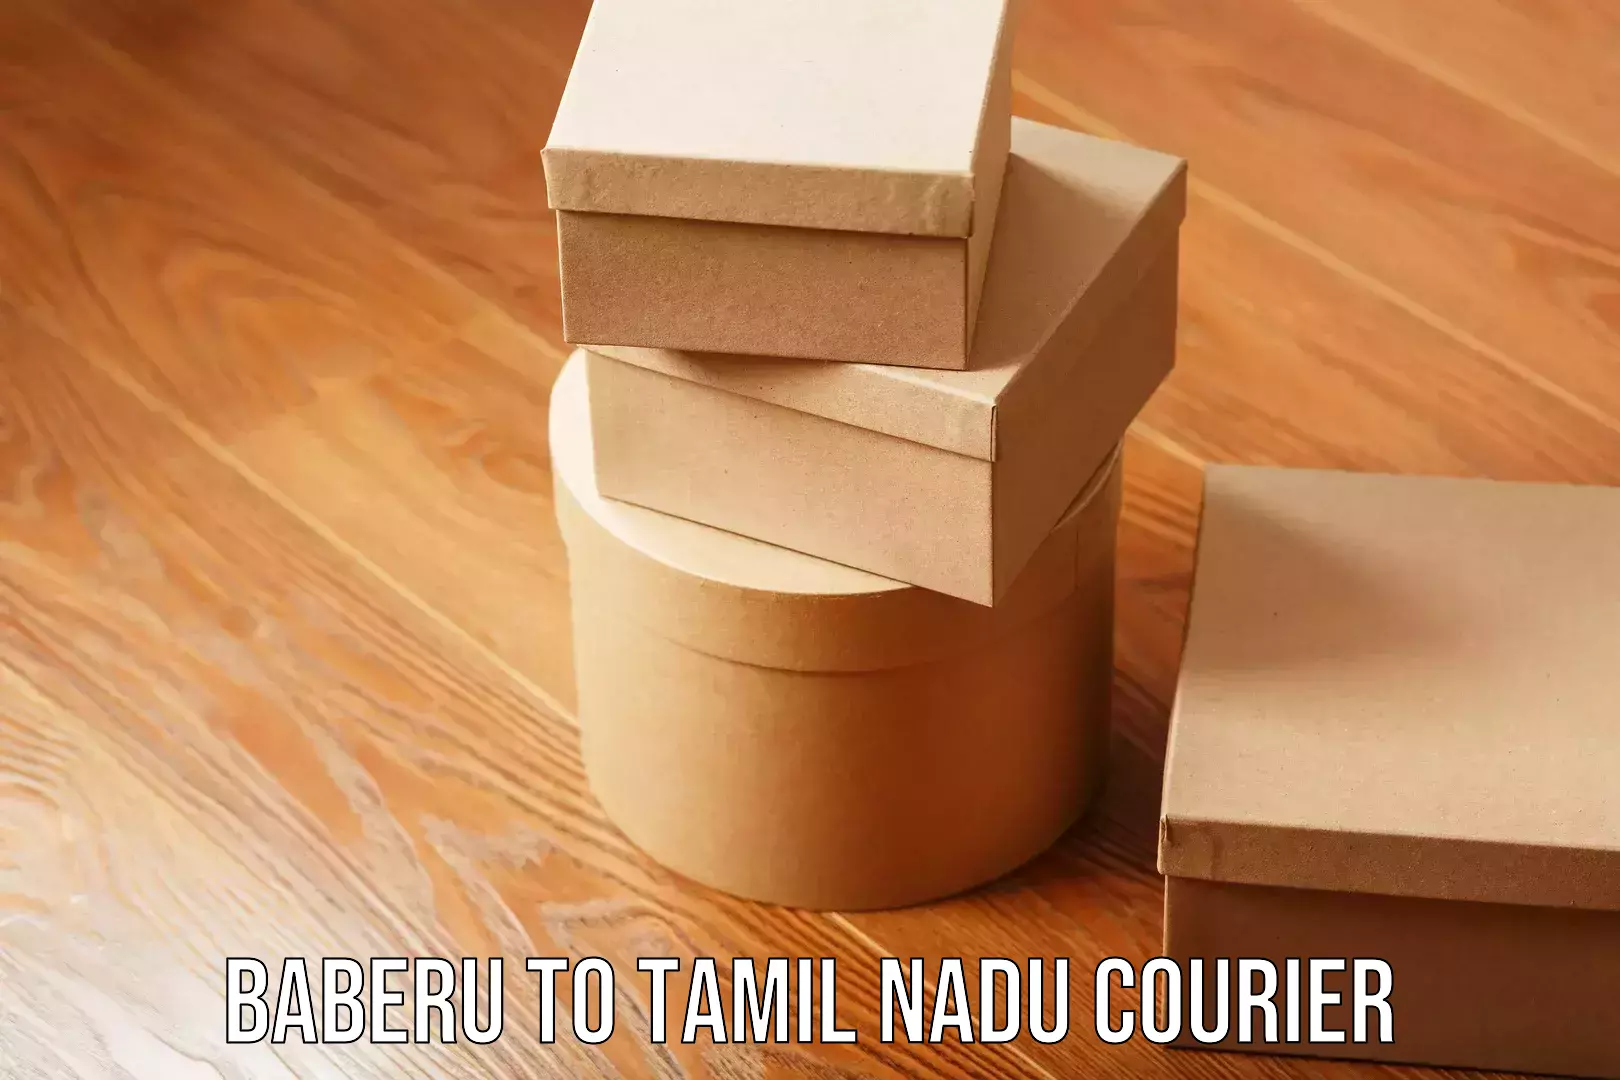 Courier service partnerships Baberu to Tamil Nadu